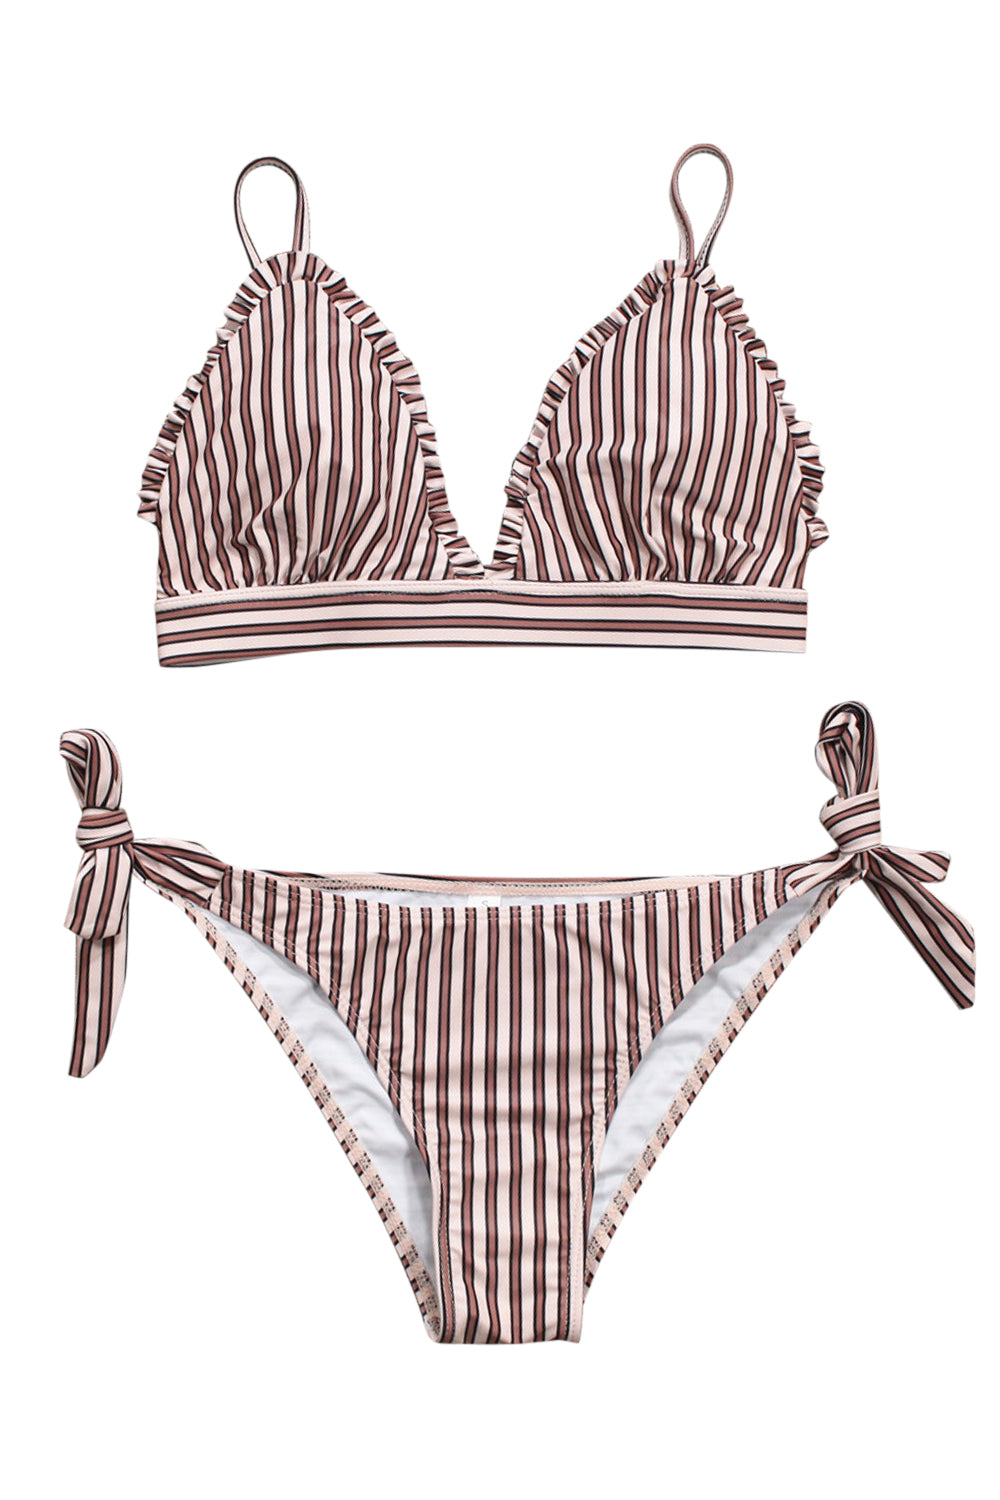 Iyasson Stripe Splicing Printing With Ruffles Bikini Sets